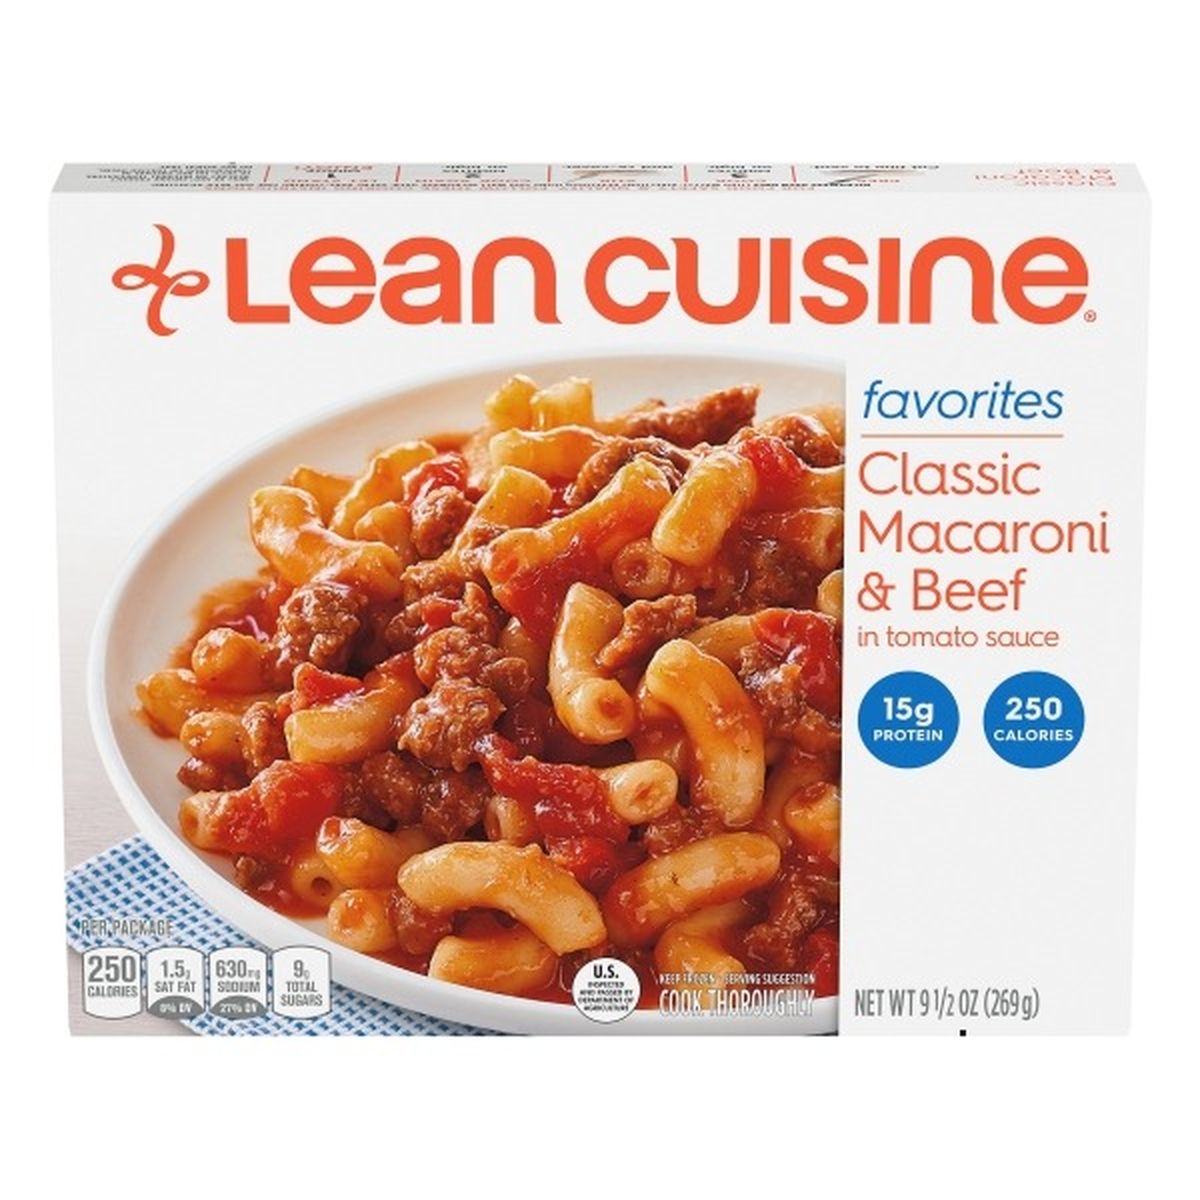 Calories in Lean Cuisine Favorites Macaroni & Beef, in Tomato Sauce, Classic